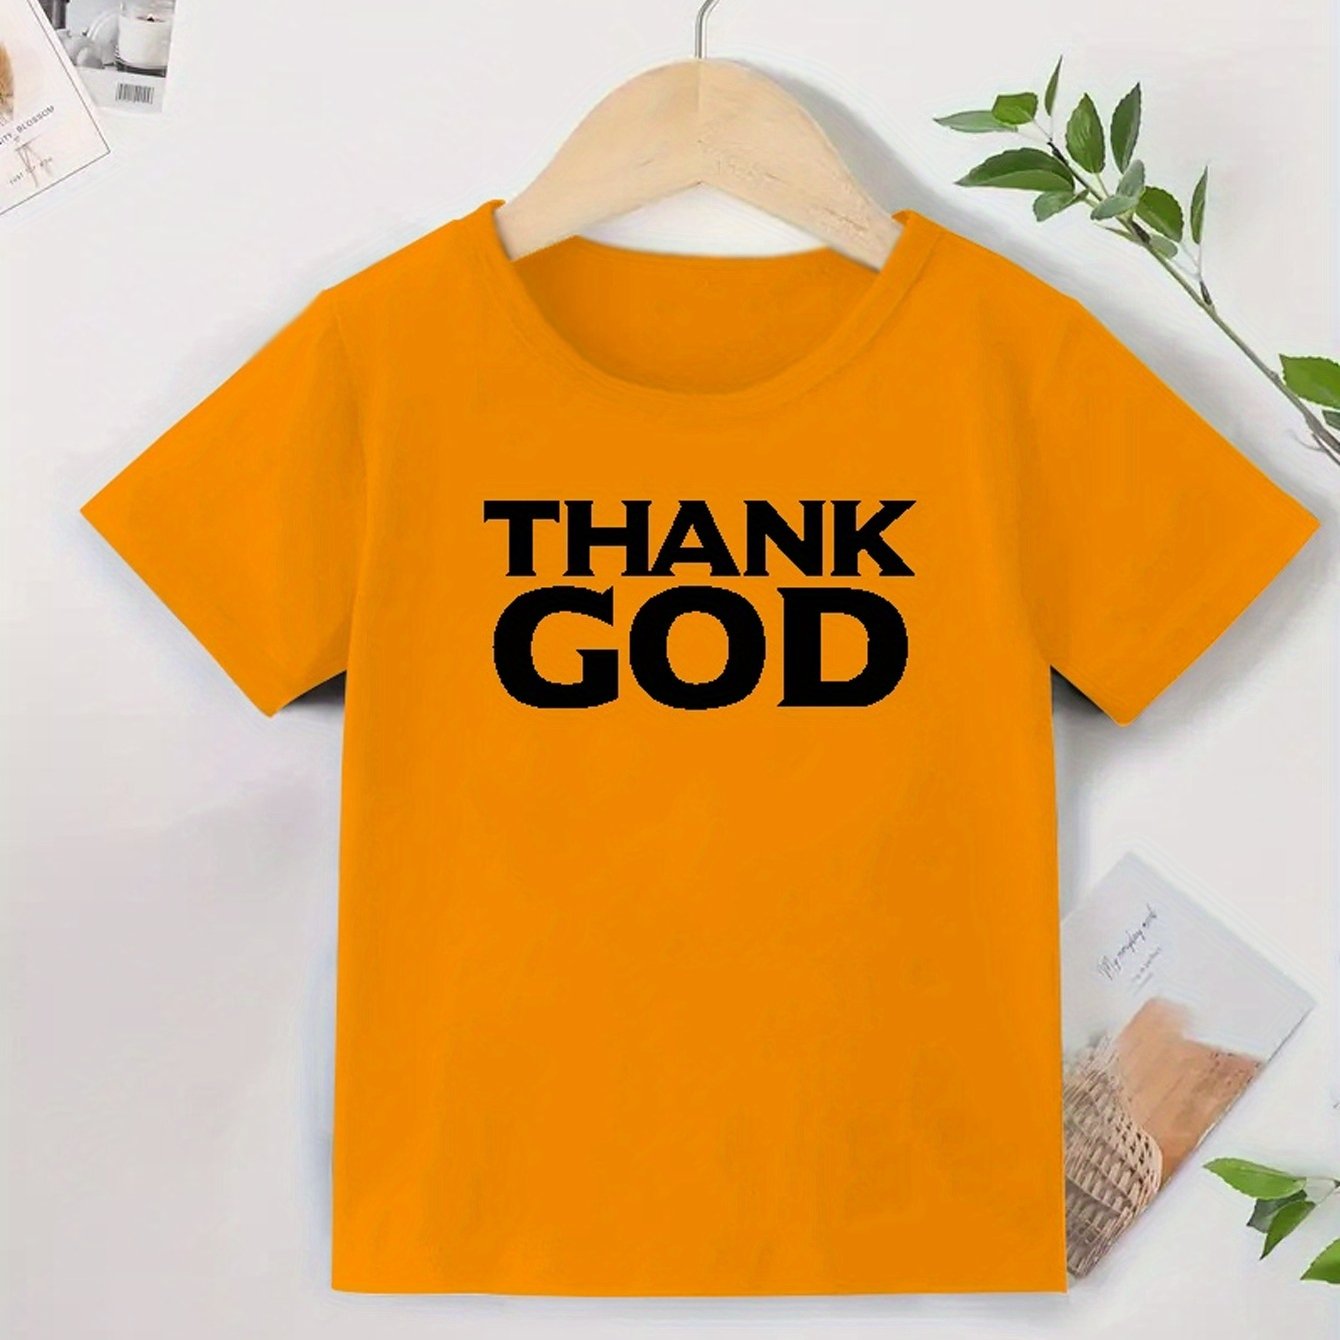 THANK GOD Youth Christian T-shirt claimedbygoddesigns